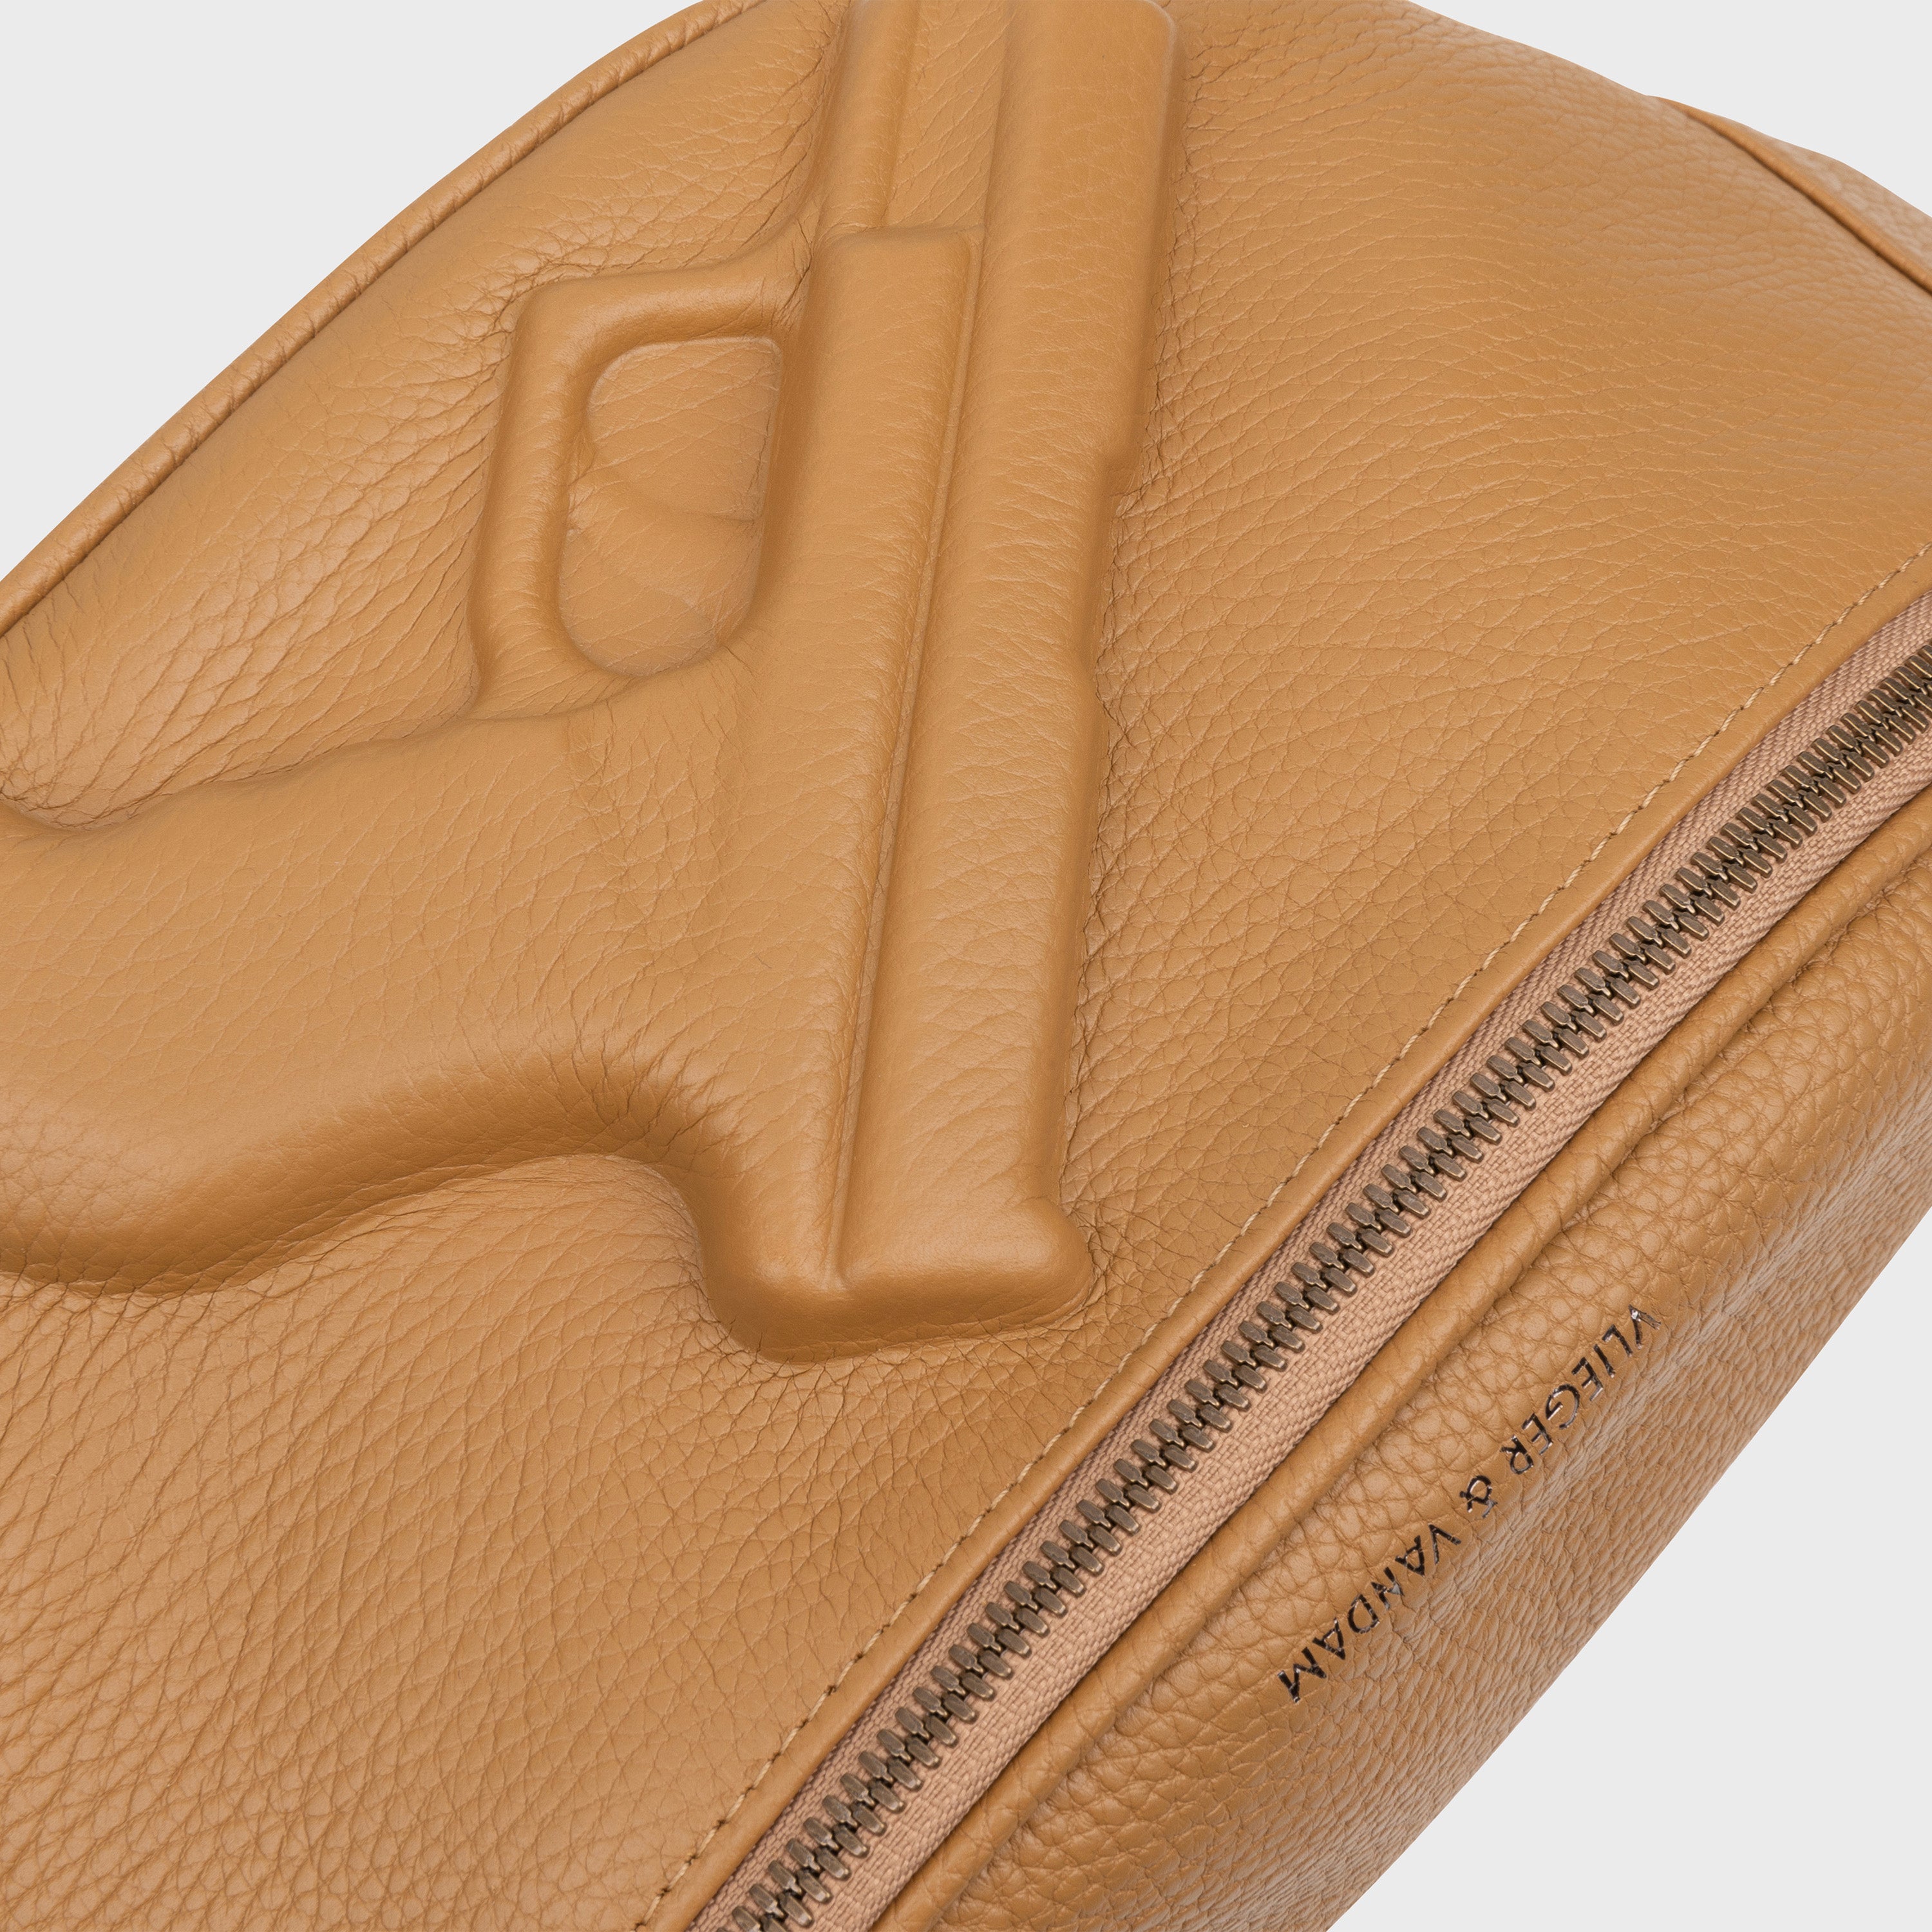 Vlieger & Vandam - Zipped Wallet Gun Black, embossed gun wallet